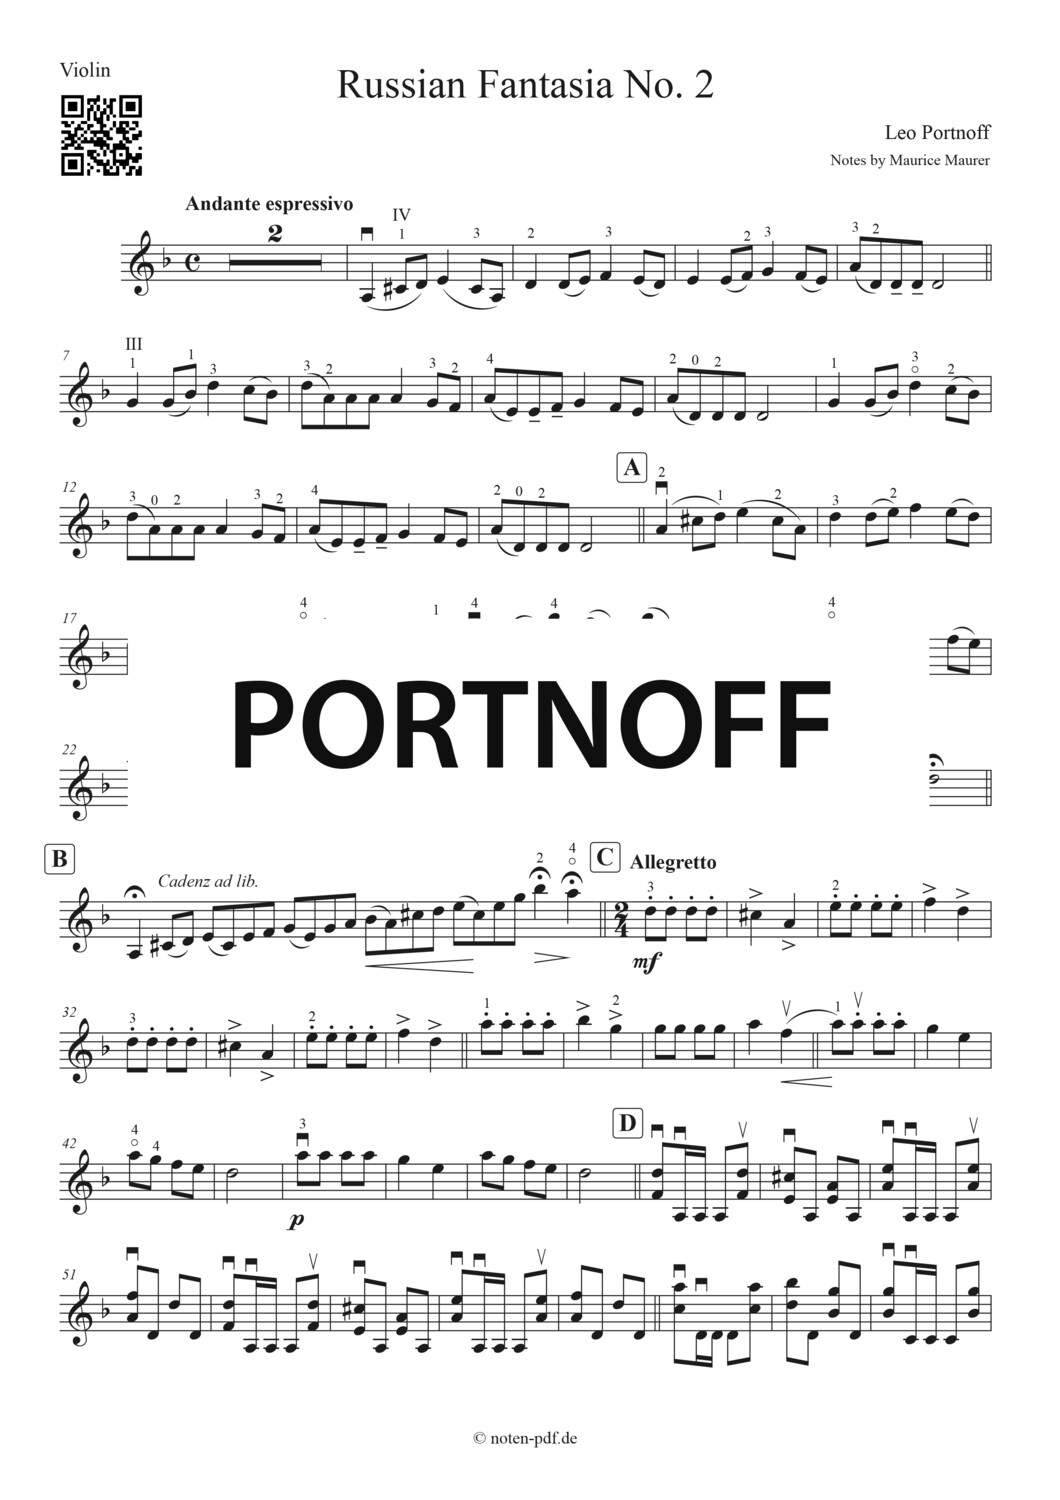 Portnoff: Russian Fantasia - No. 2